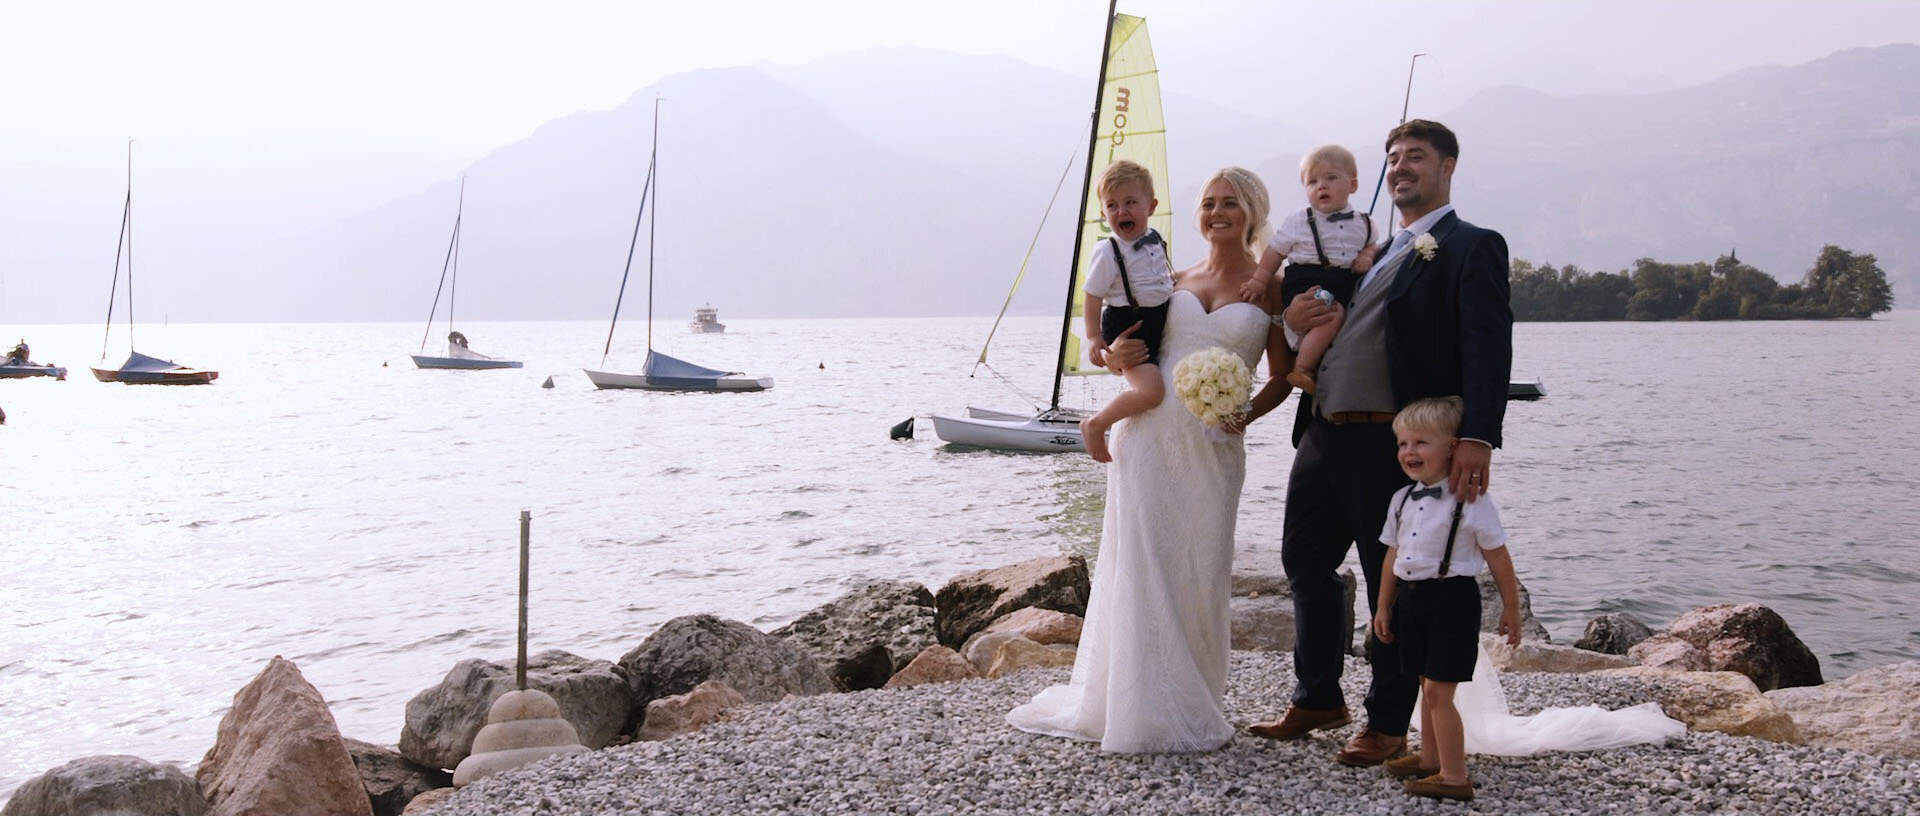 Laura & Reuben Desitnation Wedding in Malcesine Lake Garda 29.jpg